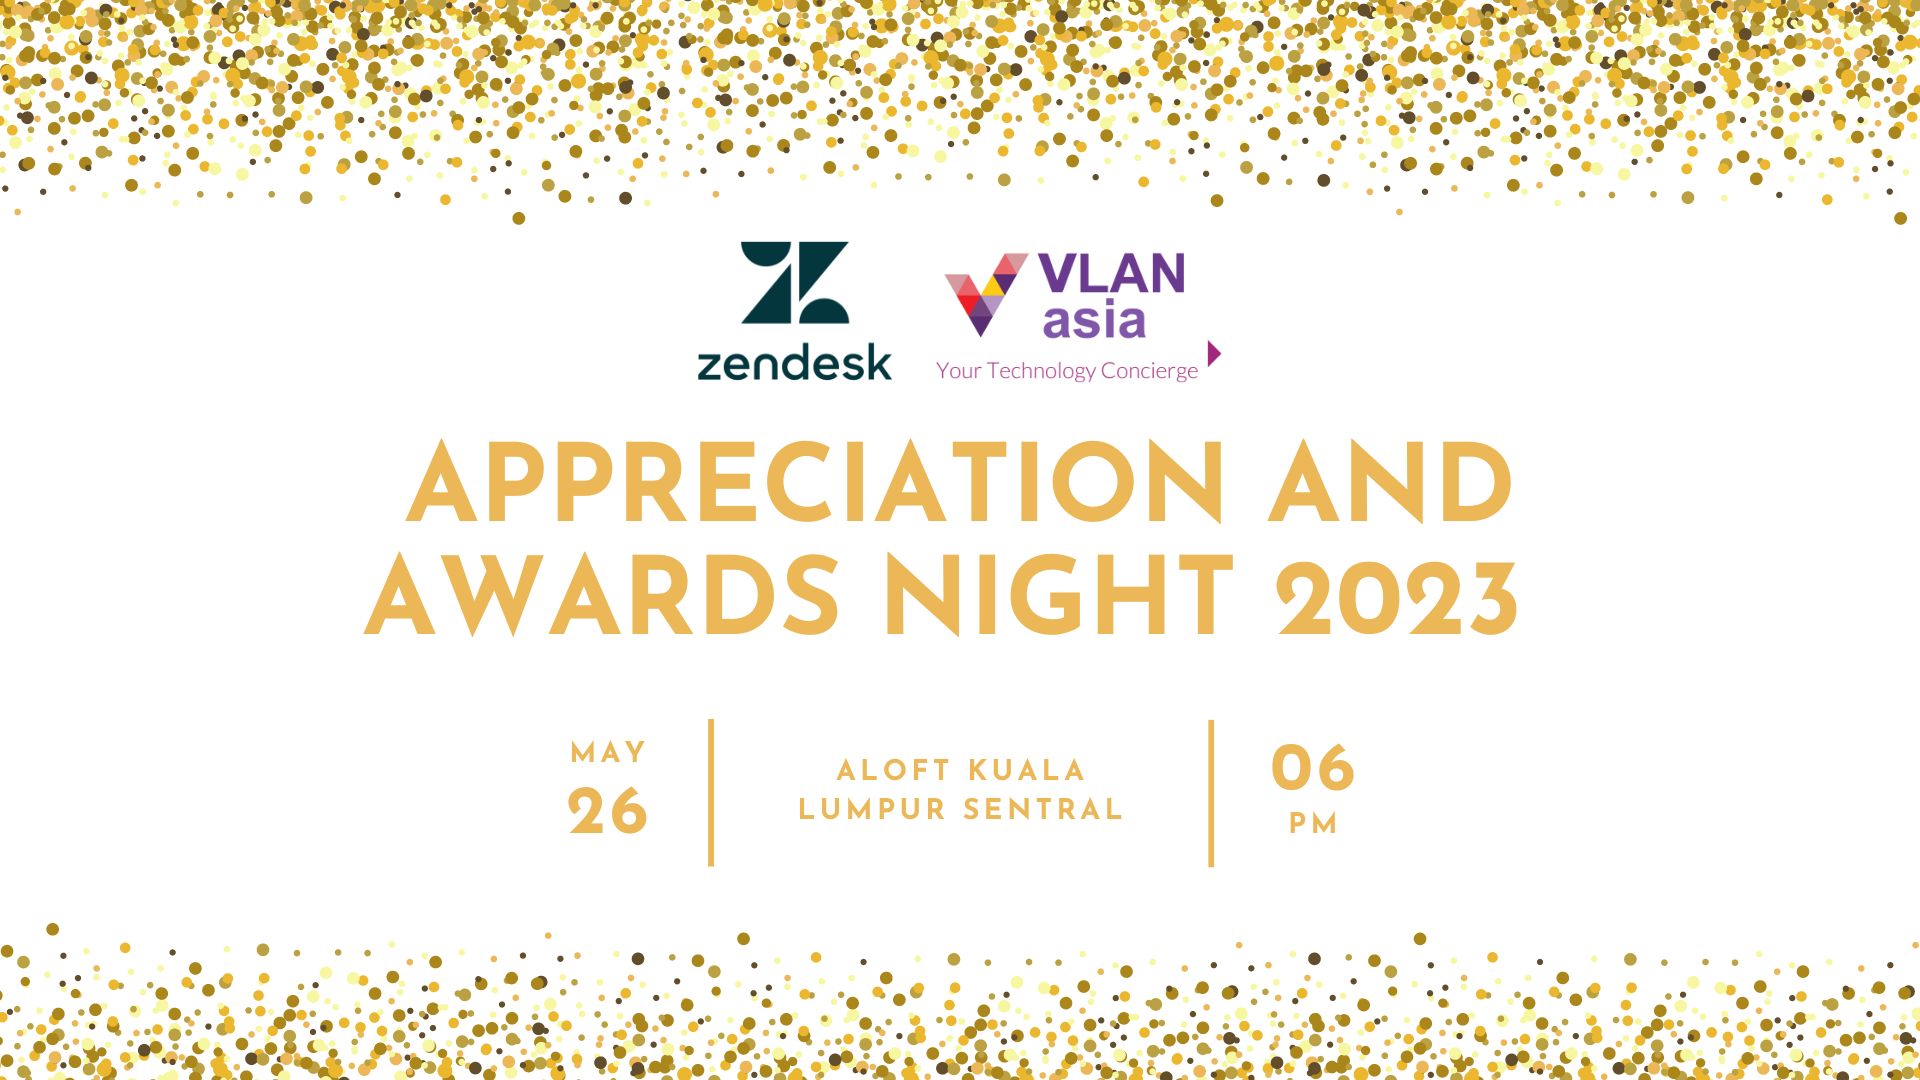 Zendesk VLAN Asia Appreciation and Awards Night 2023